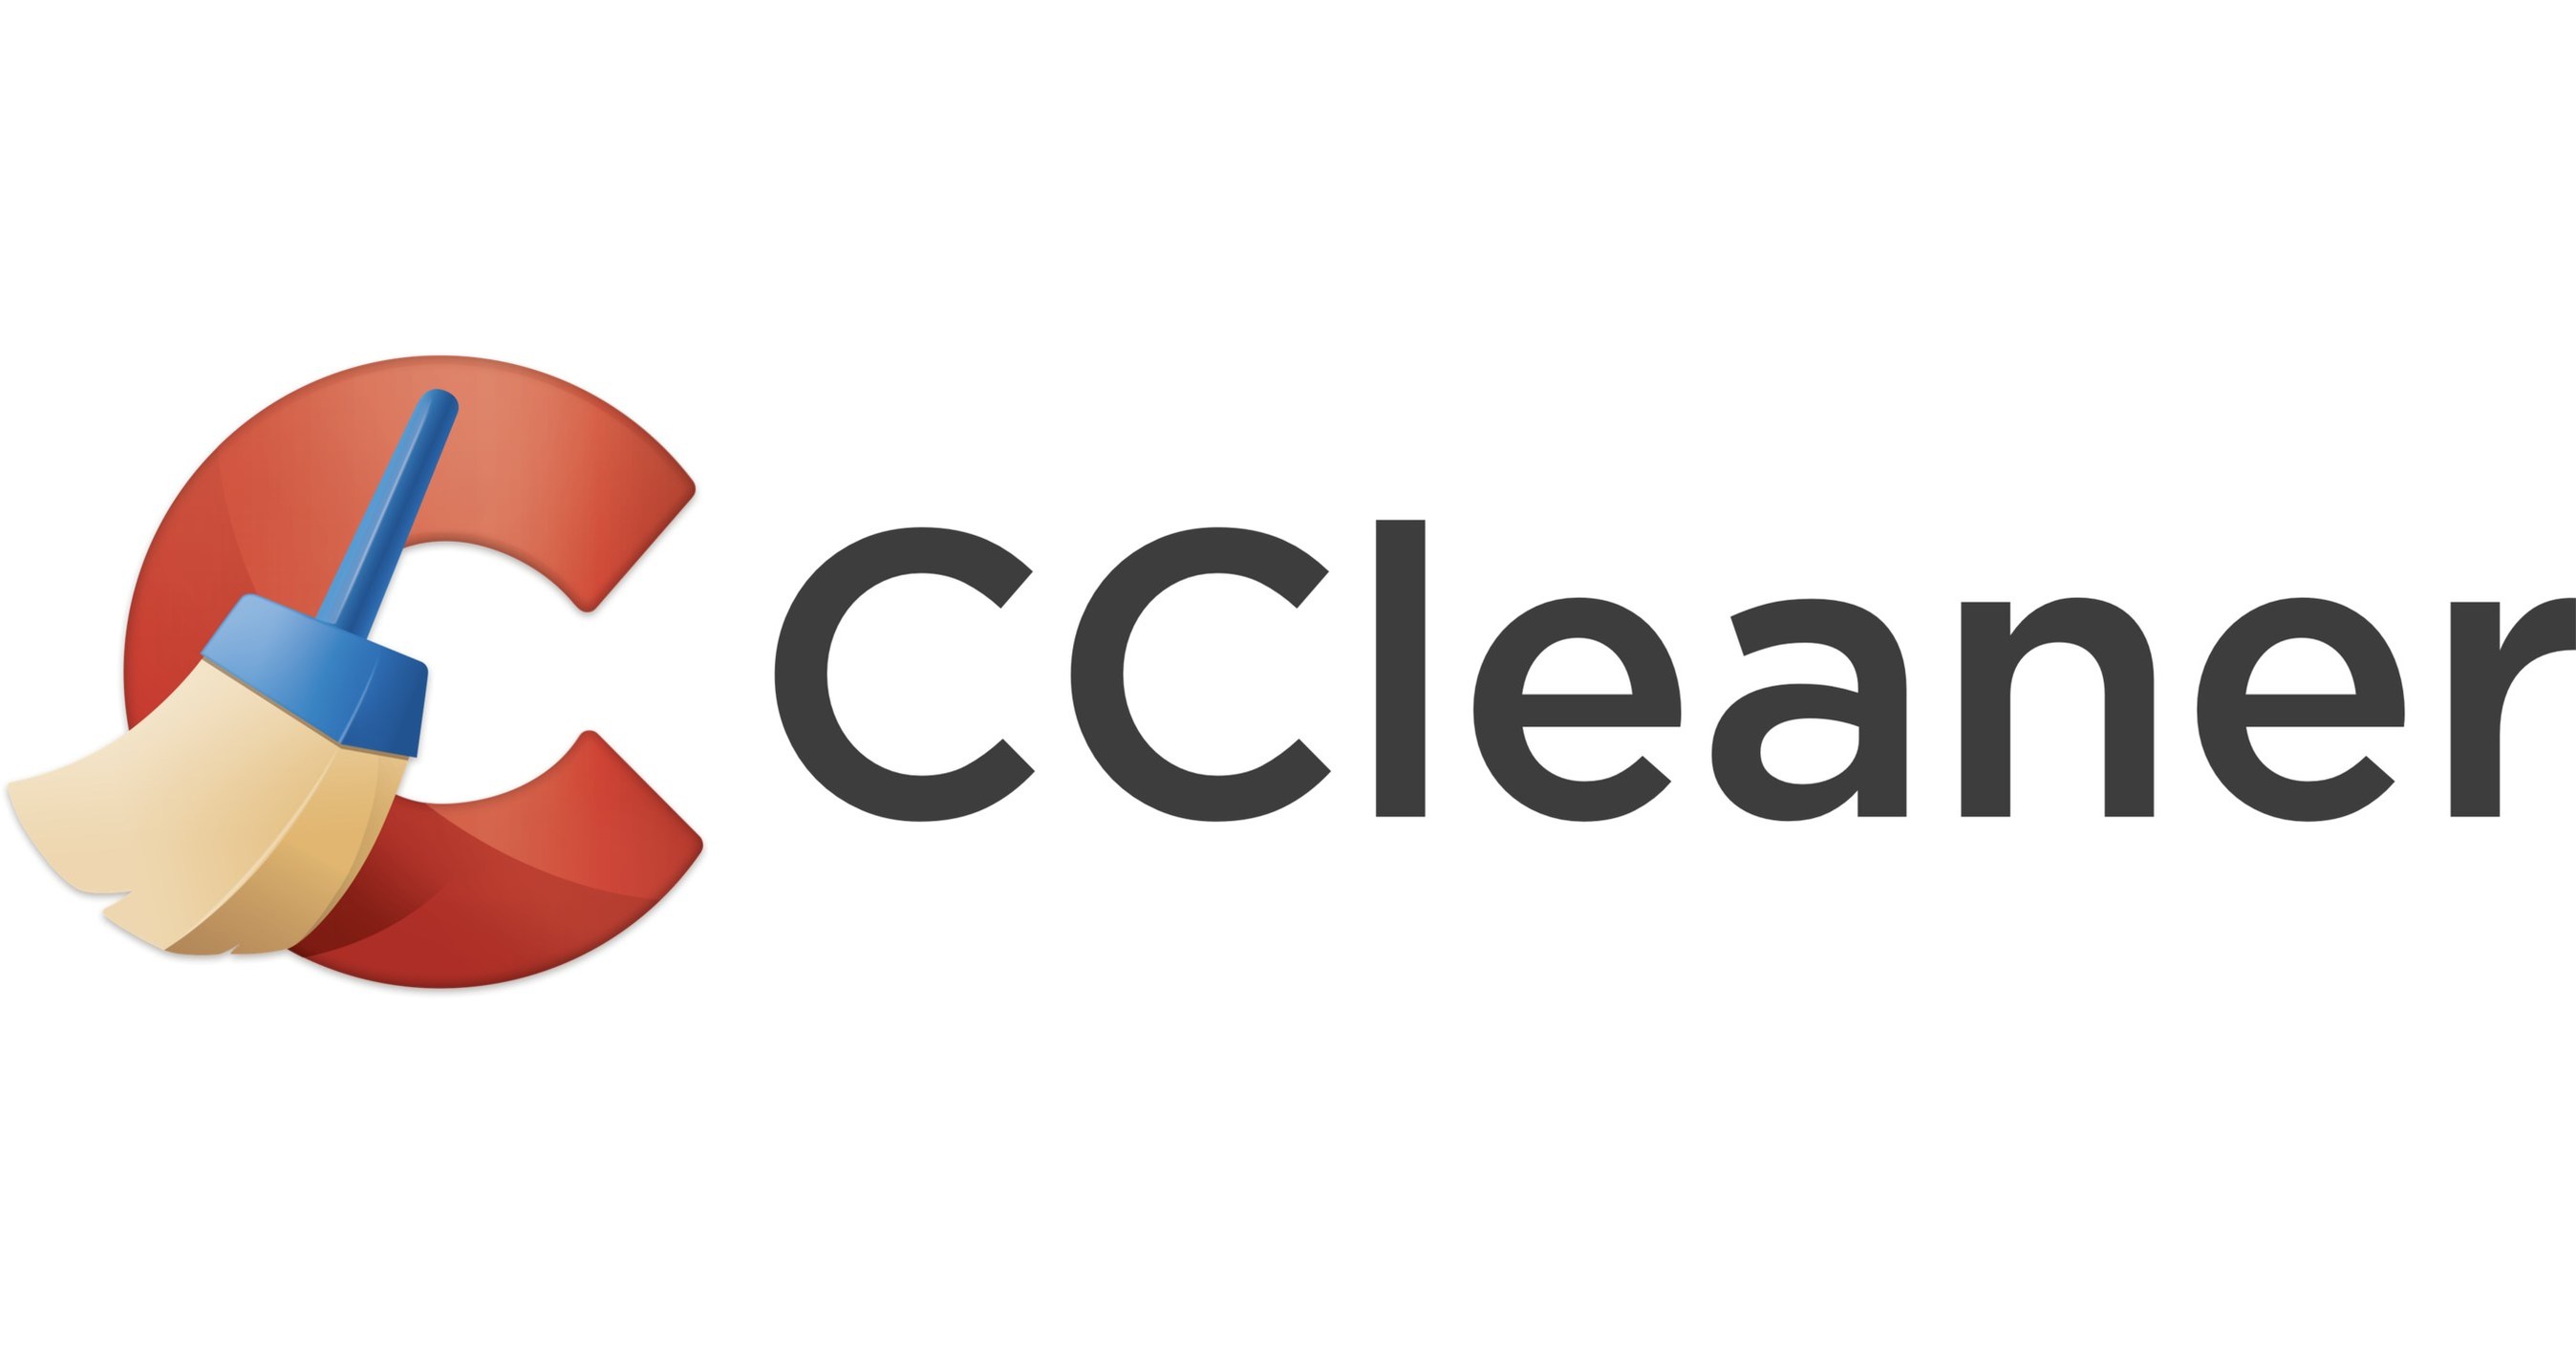 ccleaner website for free download